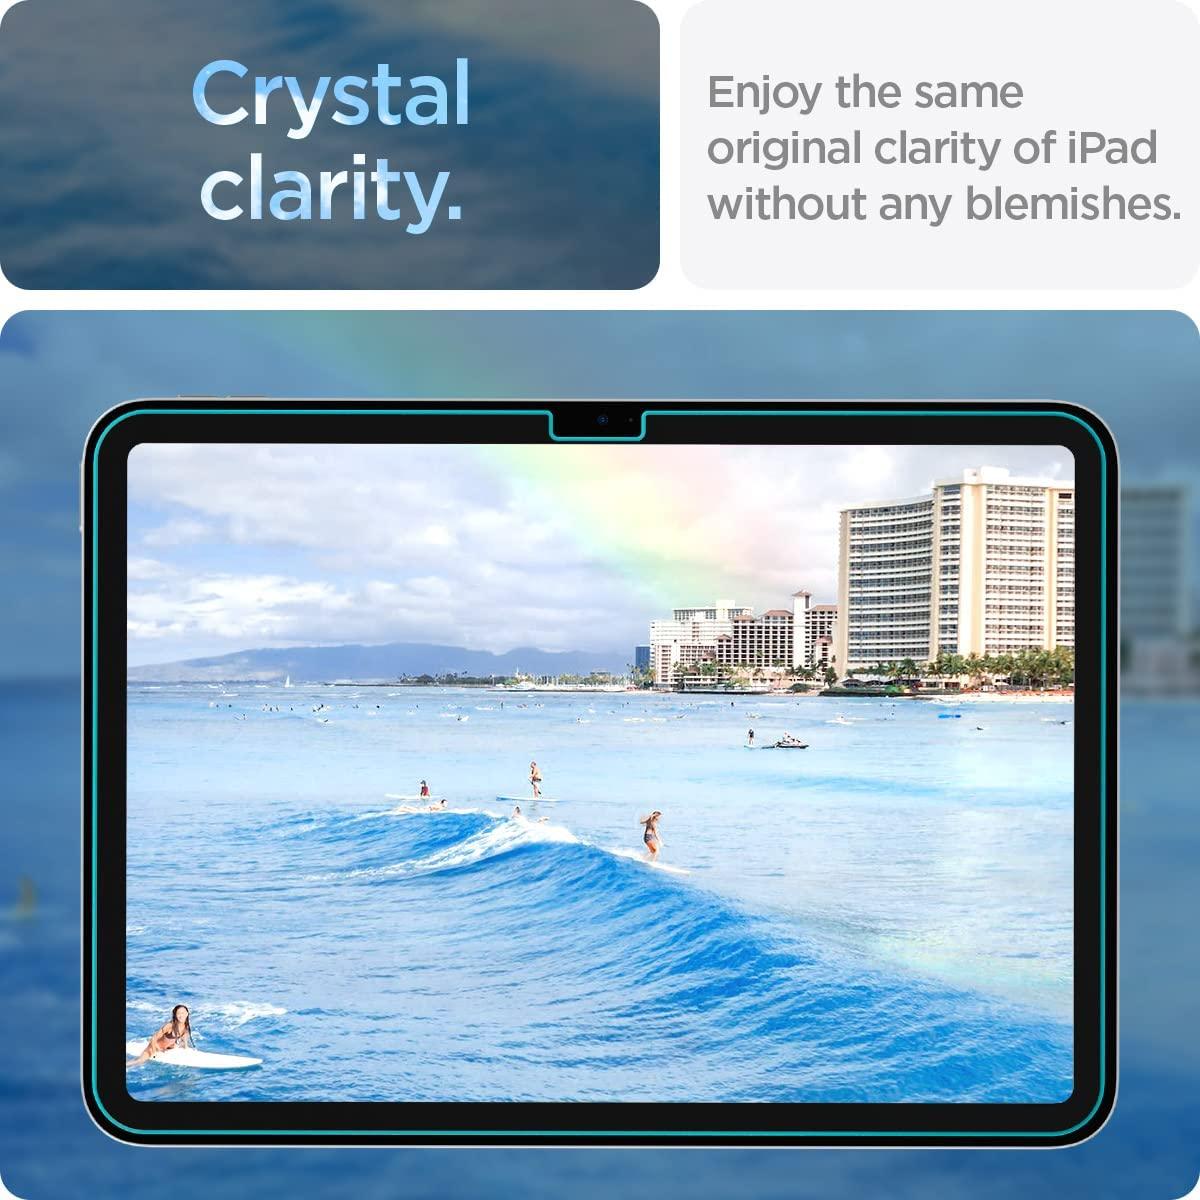 Spigen® GLAS.tR™ EZ FIT™ AGL05554 iPad 10.9-inch (2022) Premium Tempered Glass Screen Protector